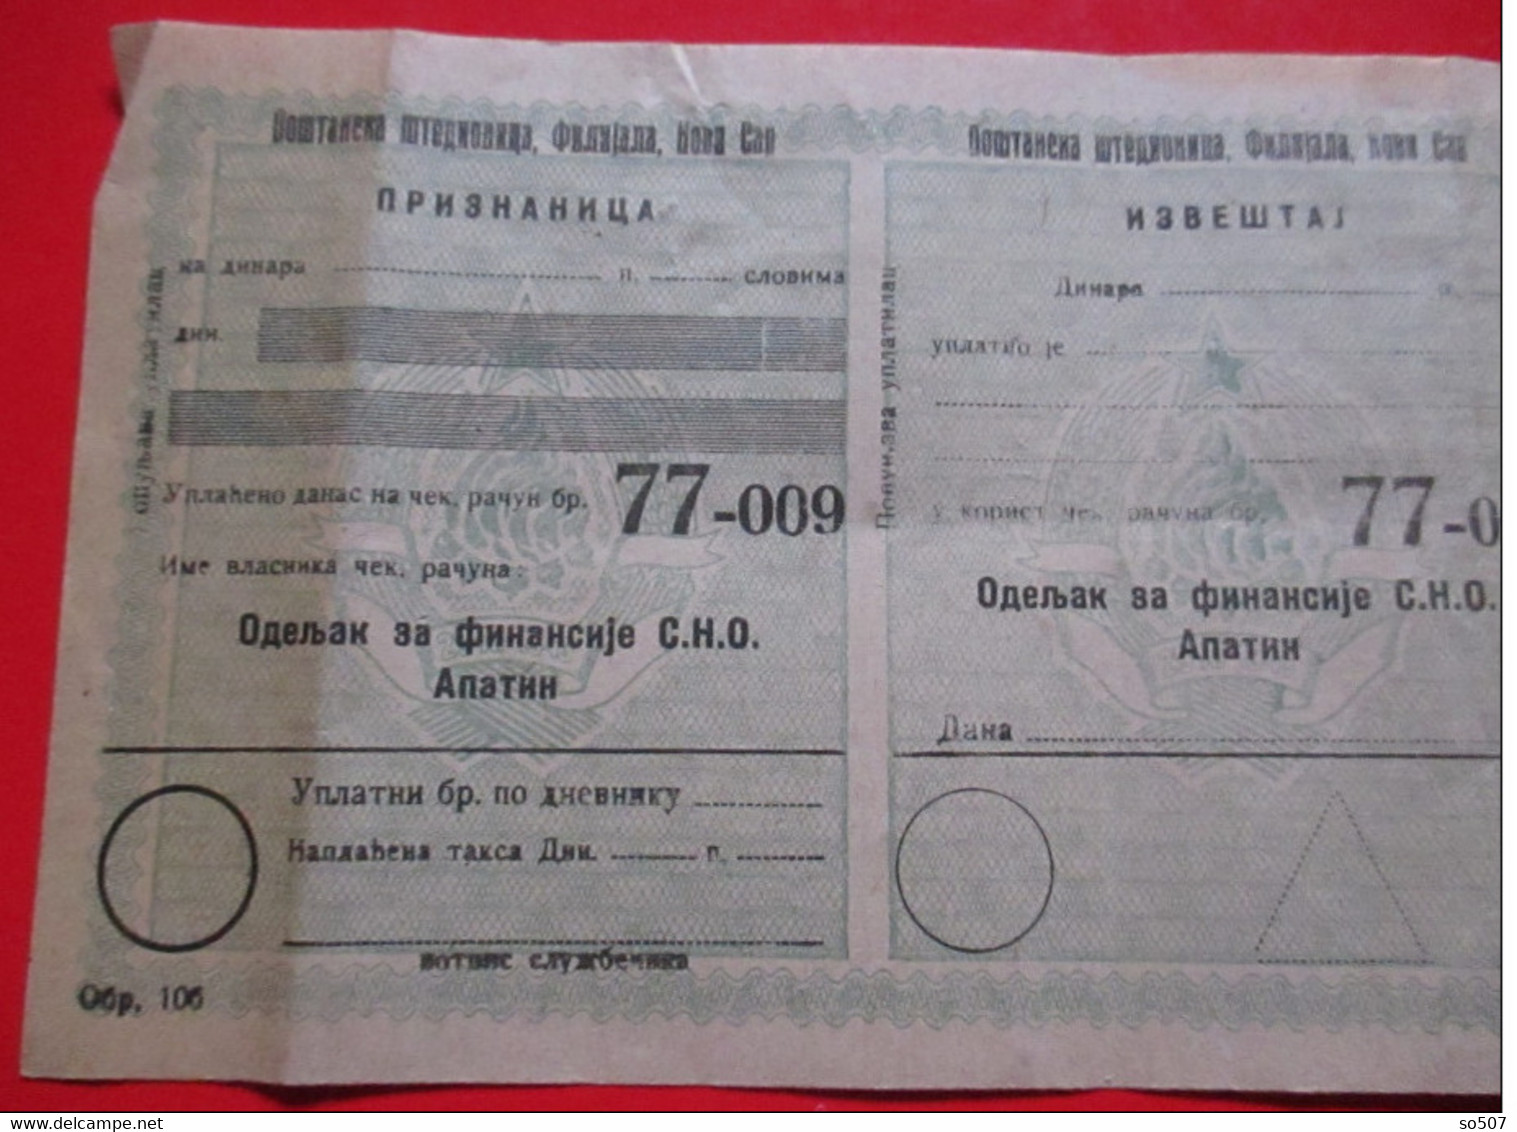 X1 - Check, Cheque, Promissory Note, Bill Of Exchange - Postal Savings Bank Novi Sad, Apatin, FNRJ Yugoslavia - Cheques & Traveler's Cheques